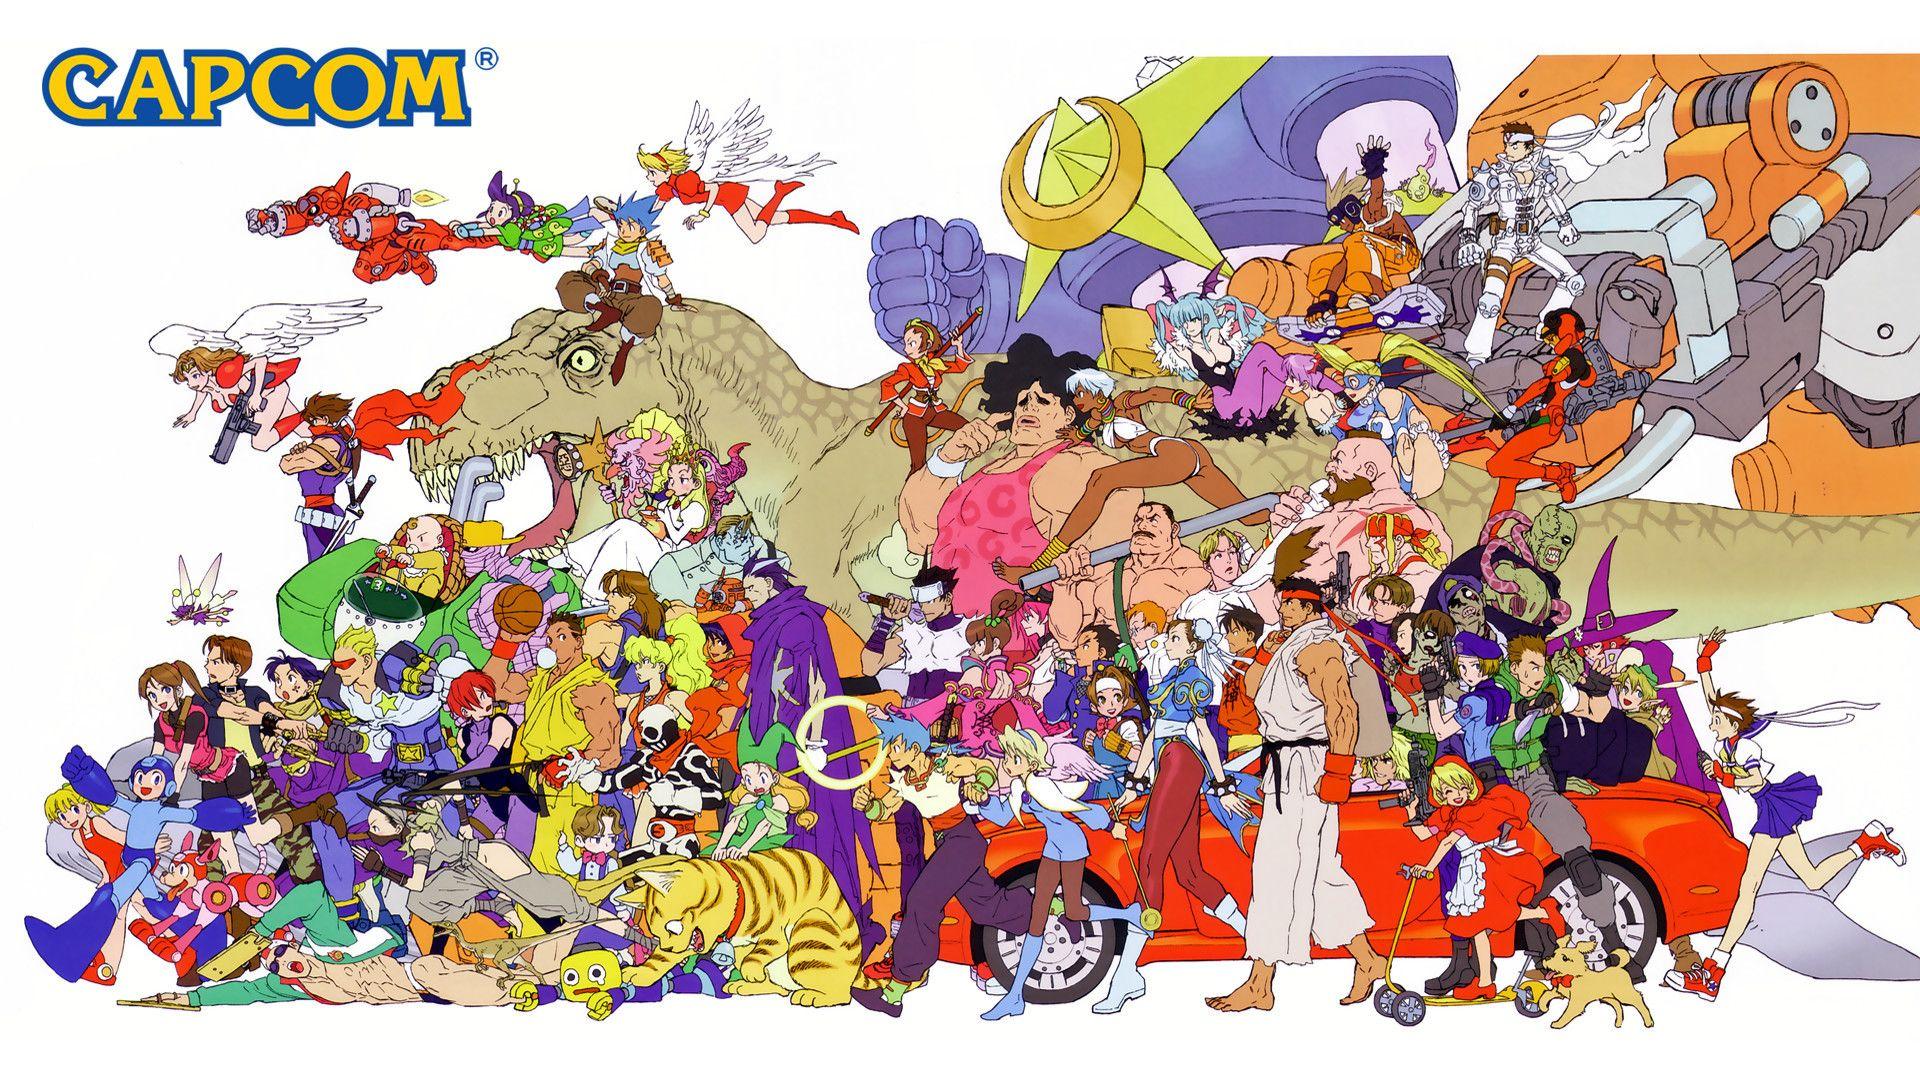 80s cartoon characters